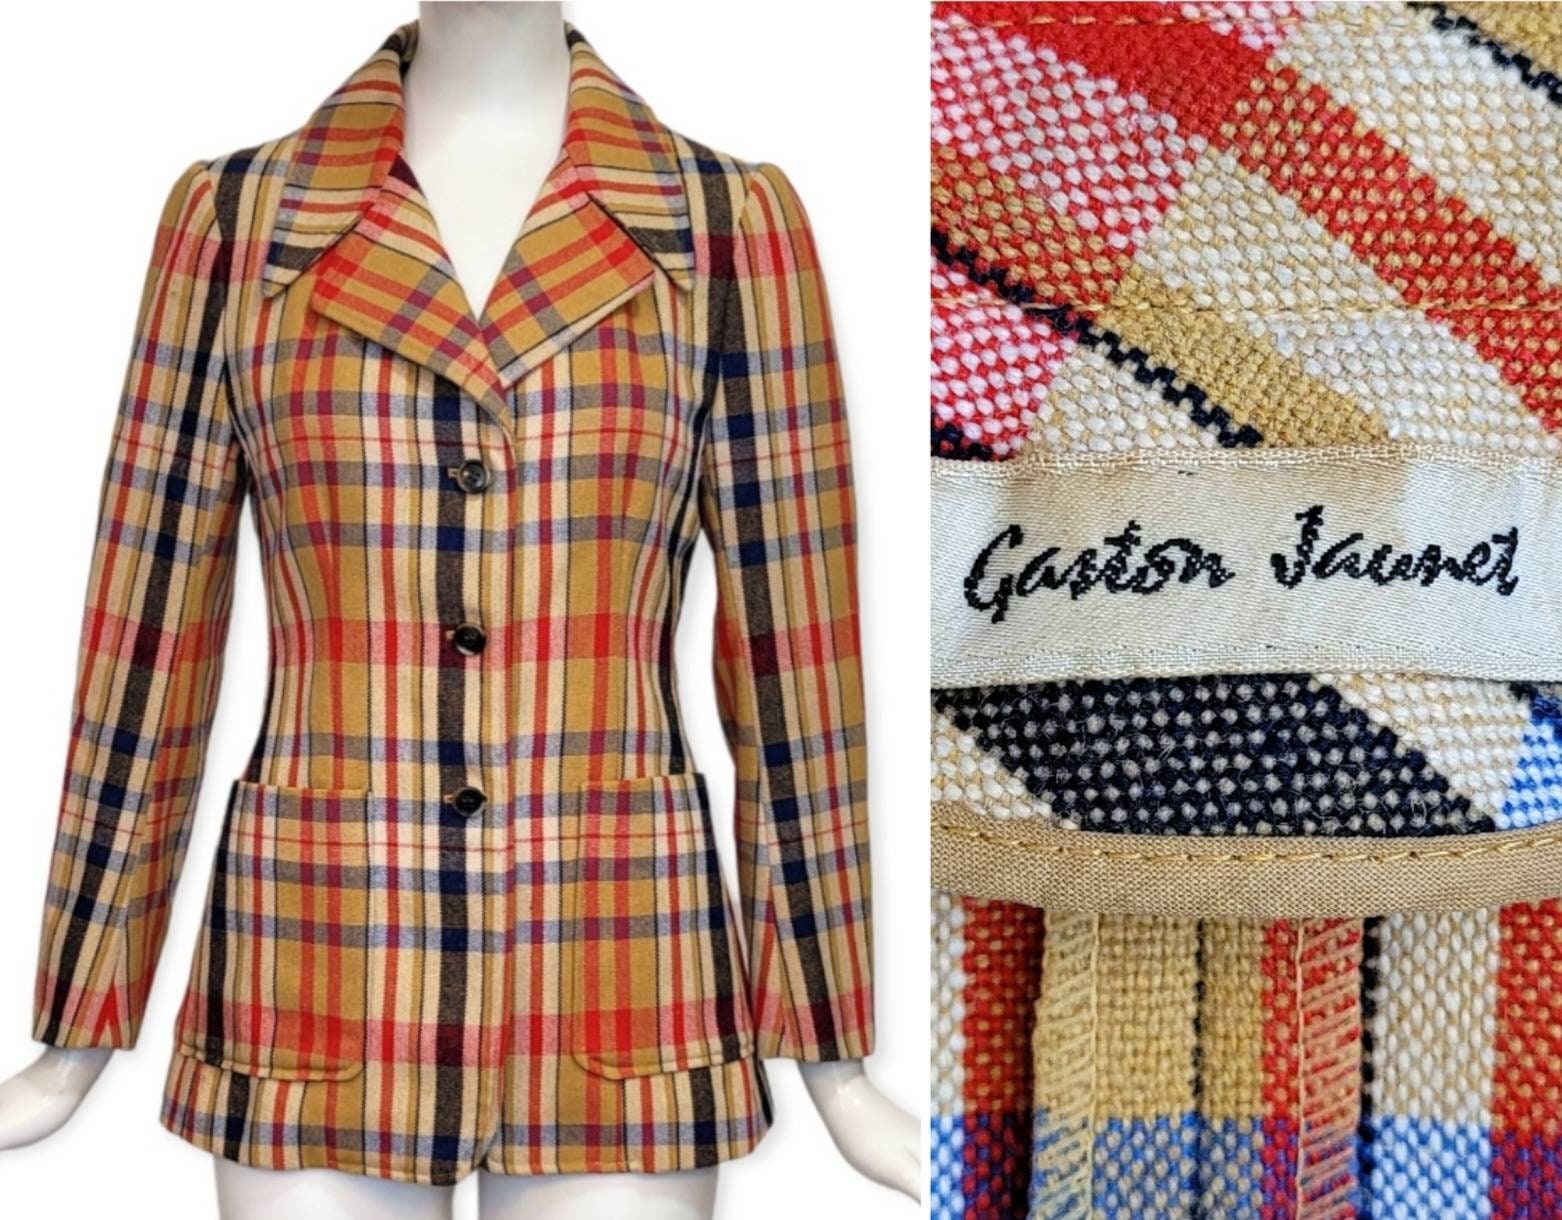 GASTON JAUNET Vintage Late 1960s Tartan Jacket 